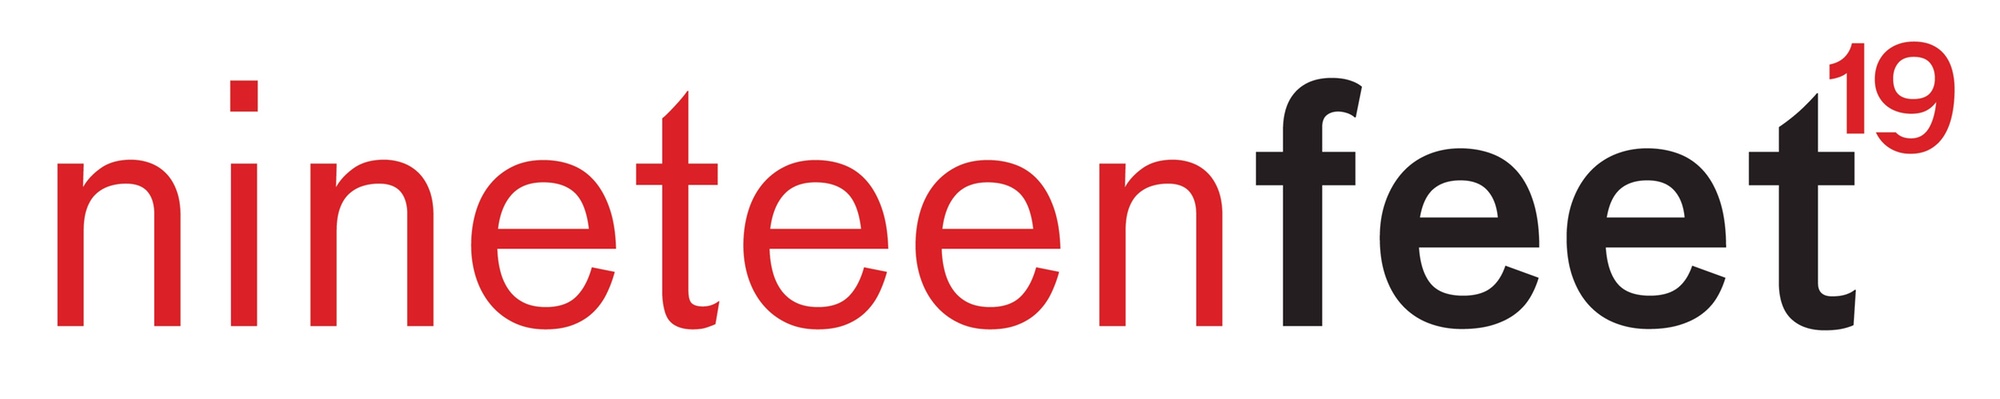 Nineteen Feet Limited logo